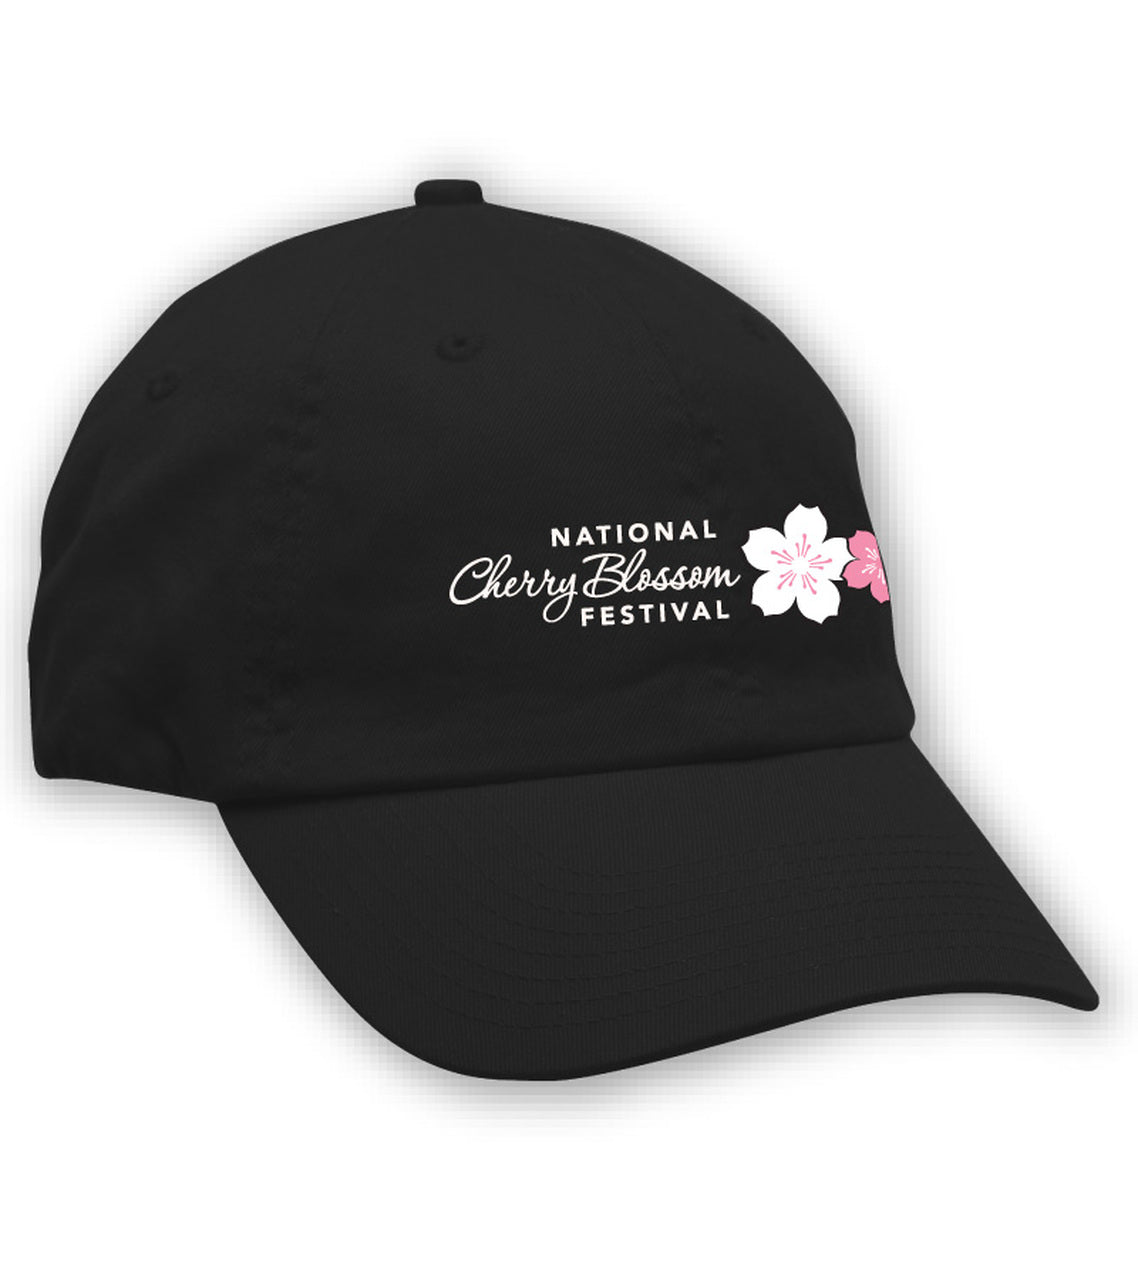 nationals cherry blossom